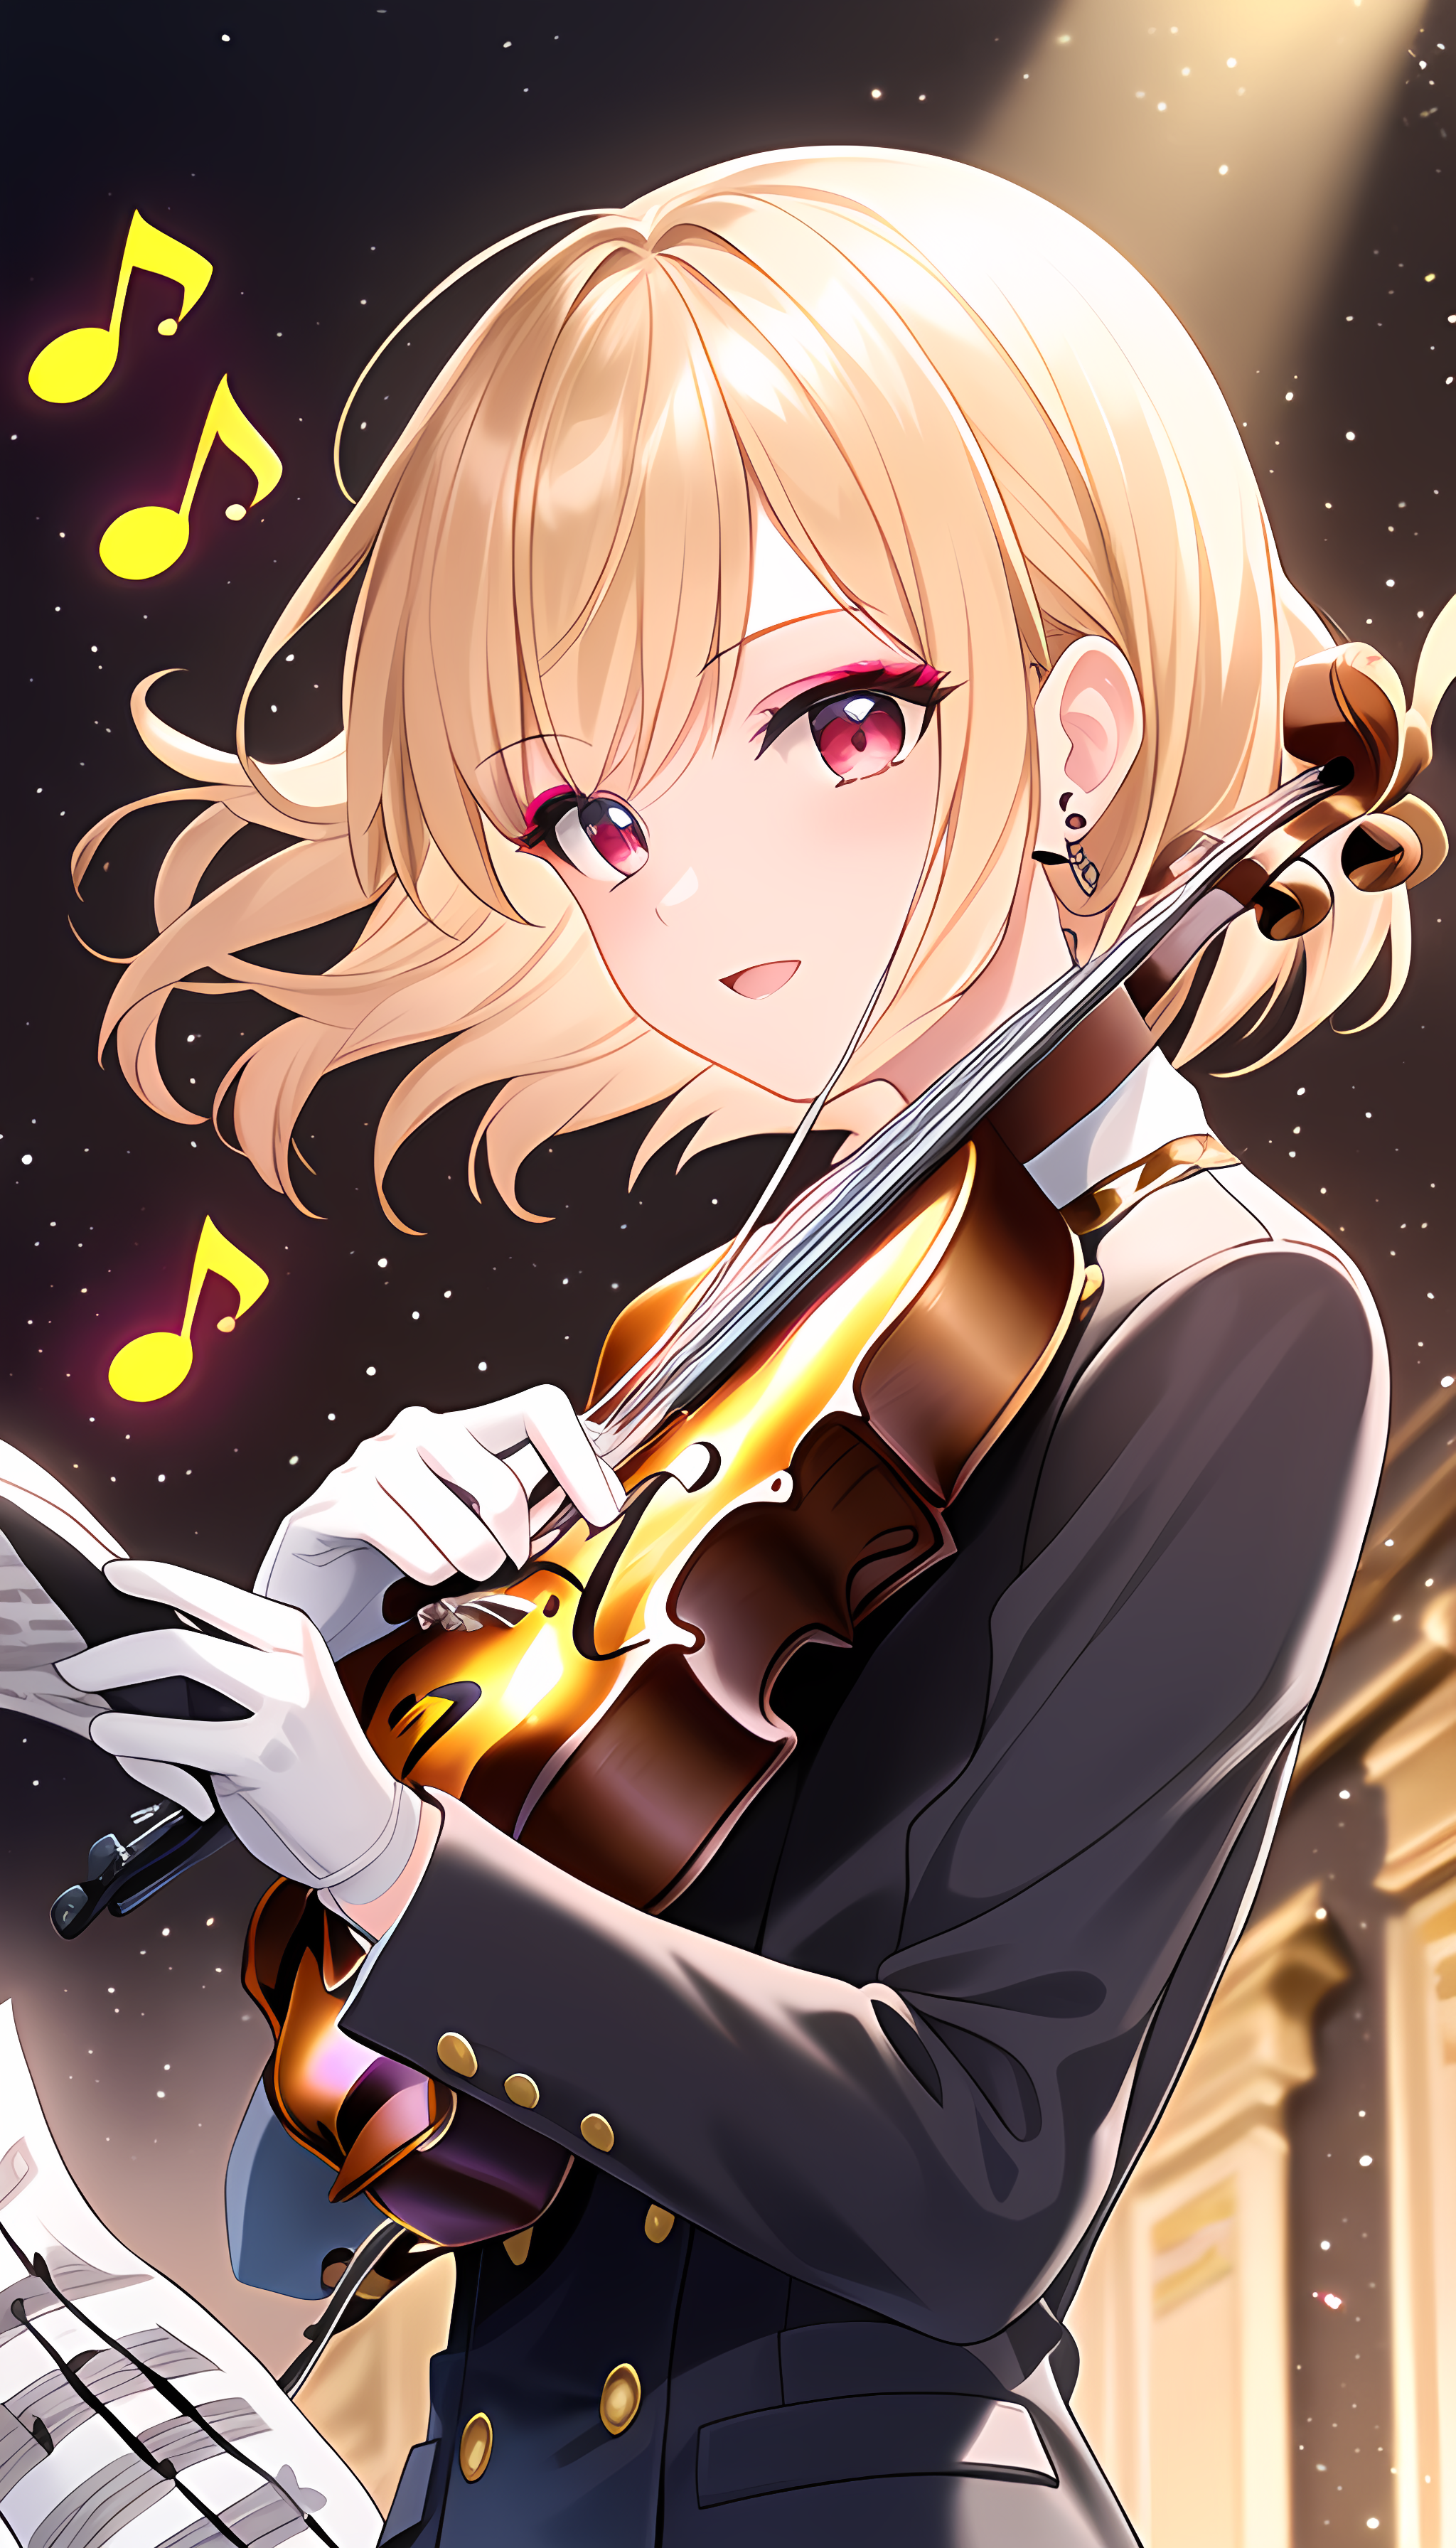 提琴手